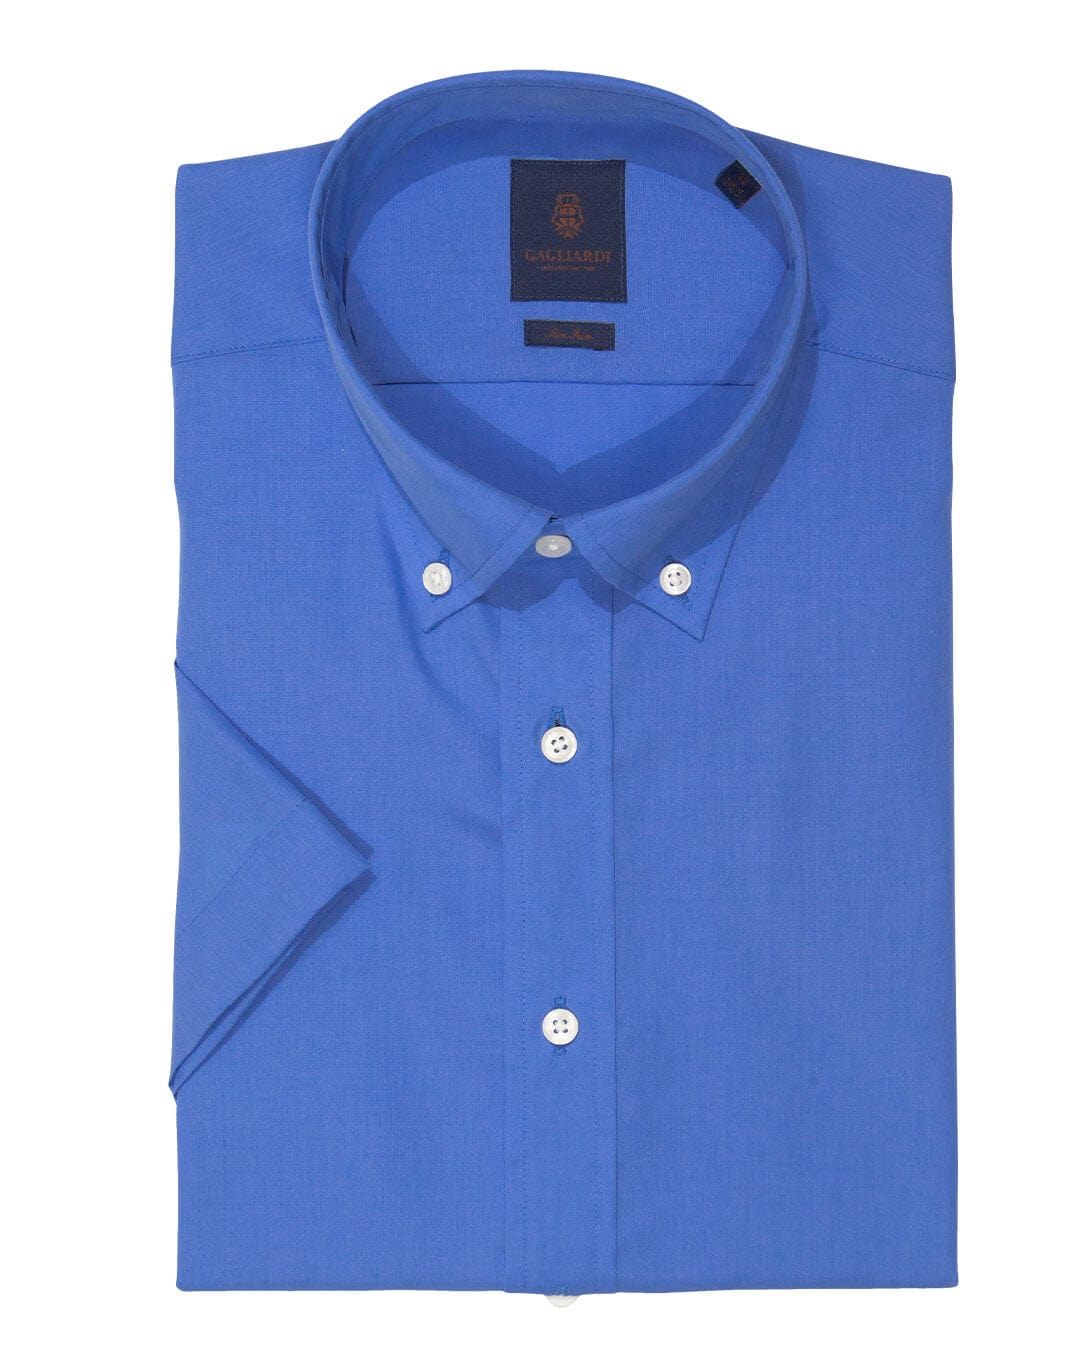 Gagliardi Shirts Gagliardi Tailored Fit Blue Poplin Non Iron Button-Down Short Sleeve Shirt